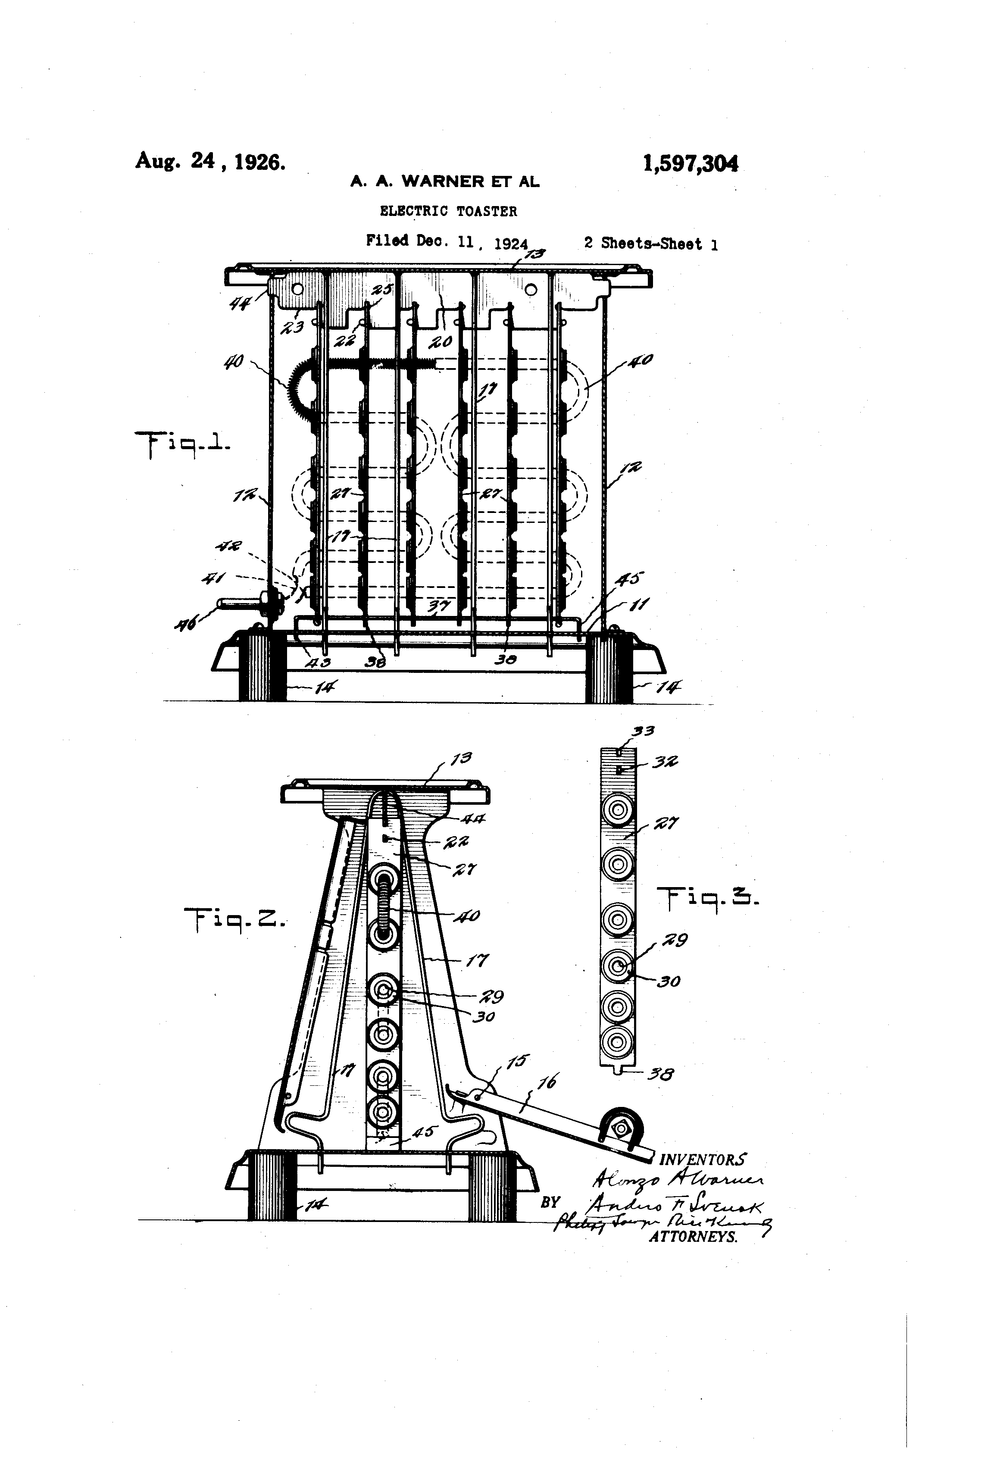 A.A. Warner et al., Electric Toaster, 1926, US1597304